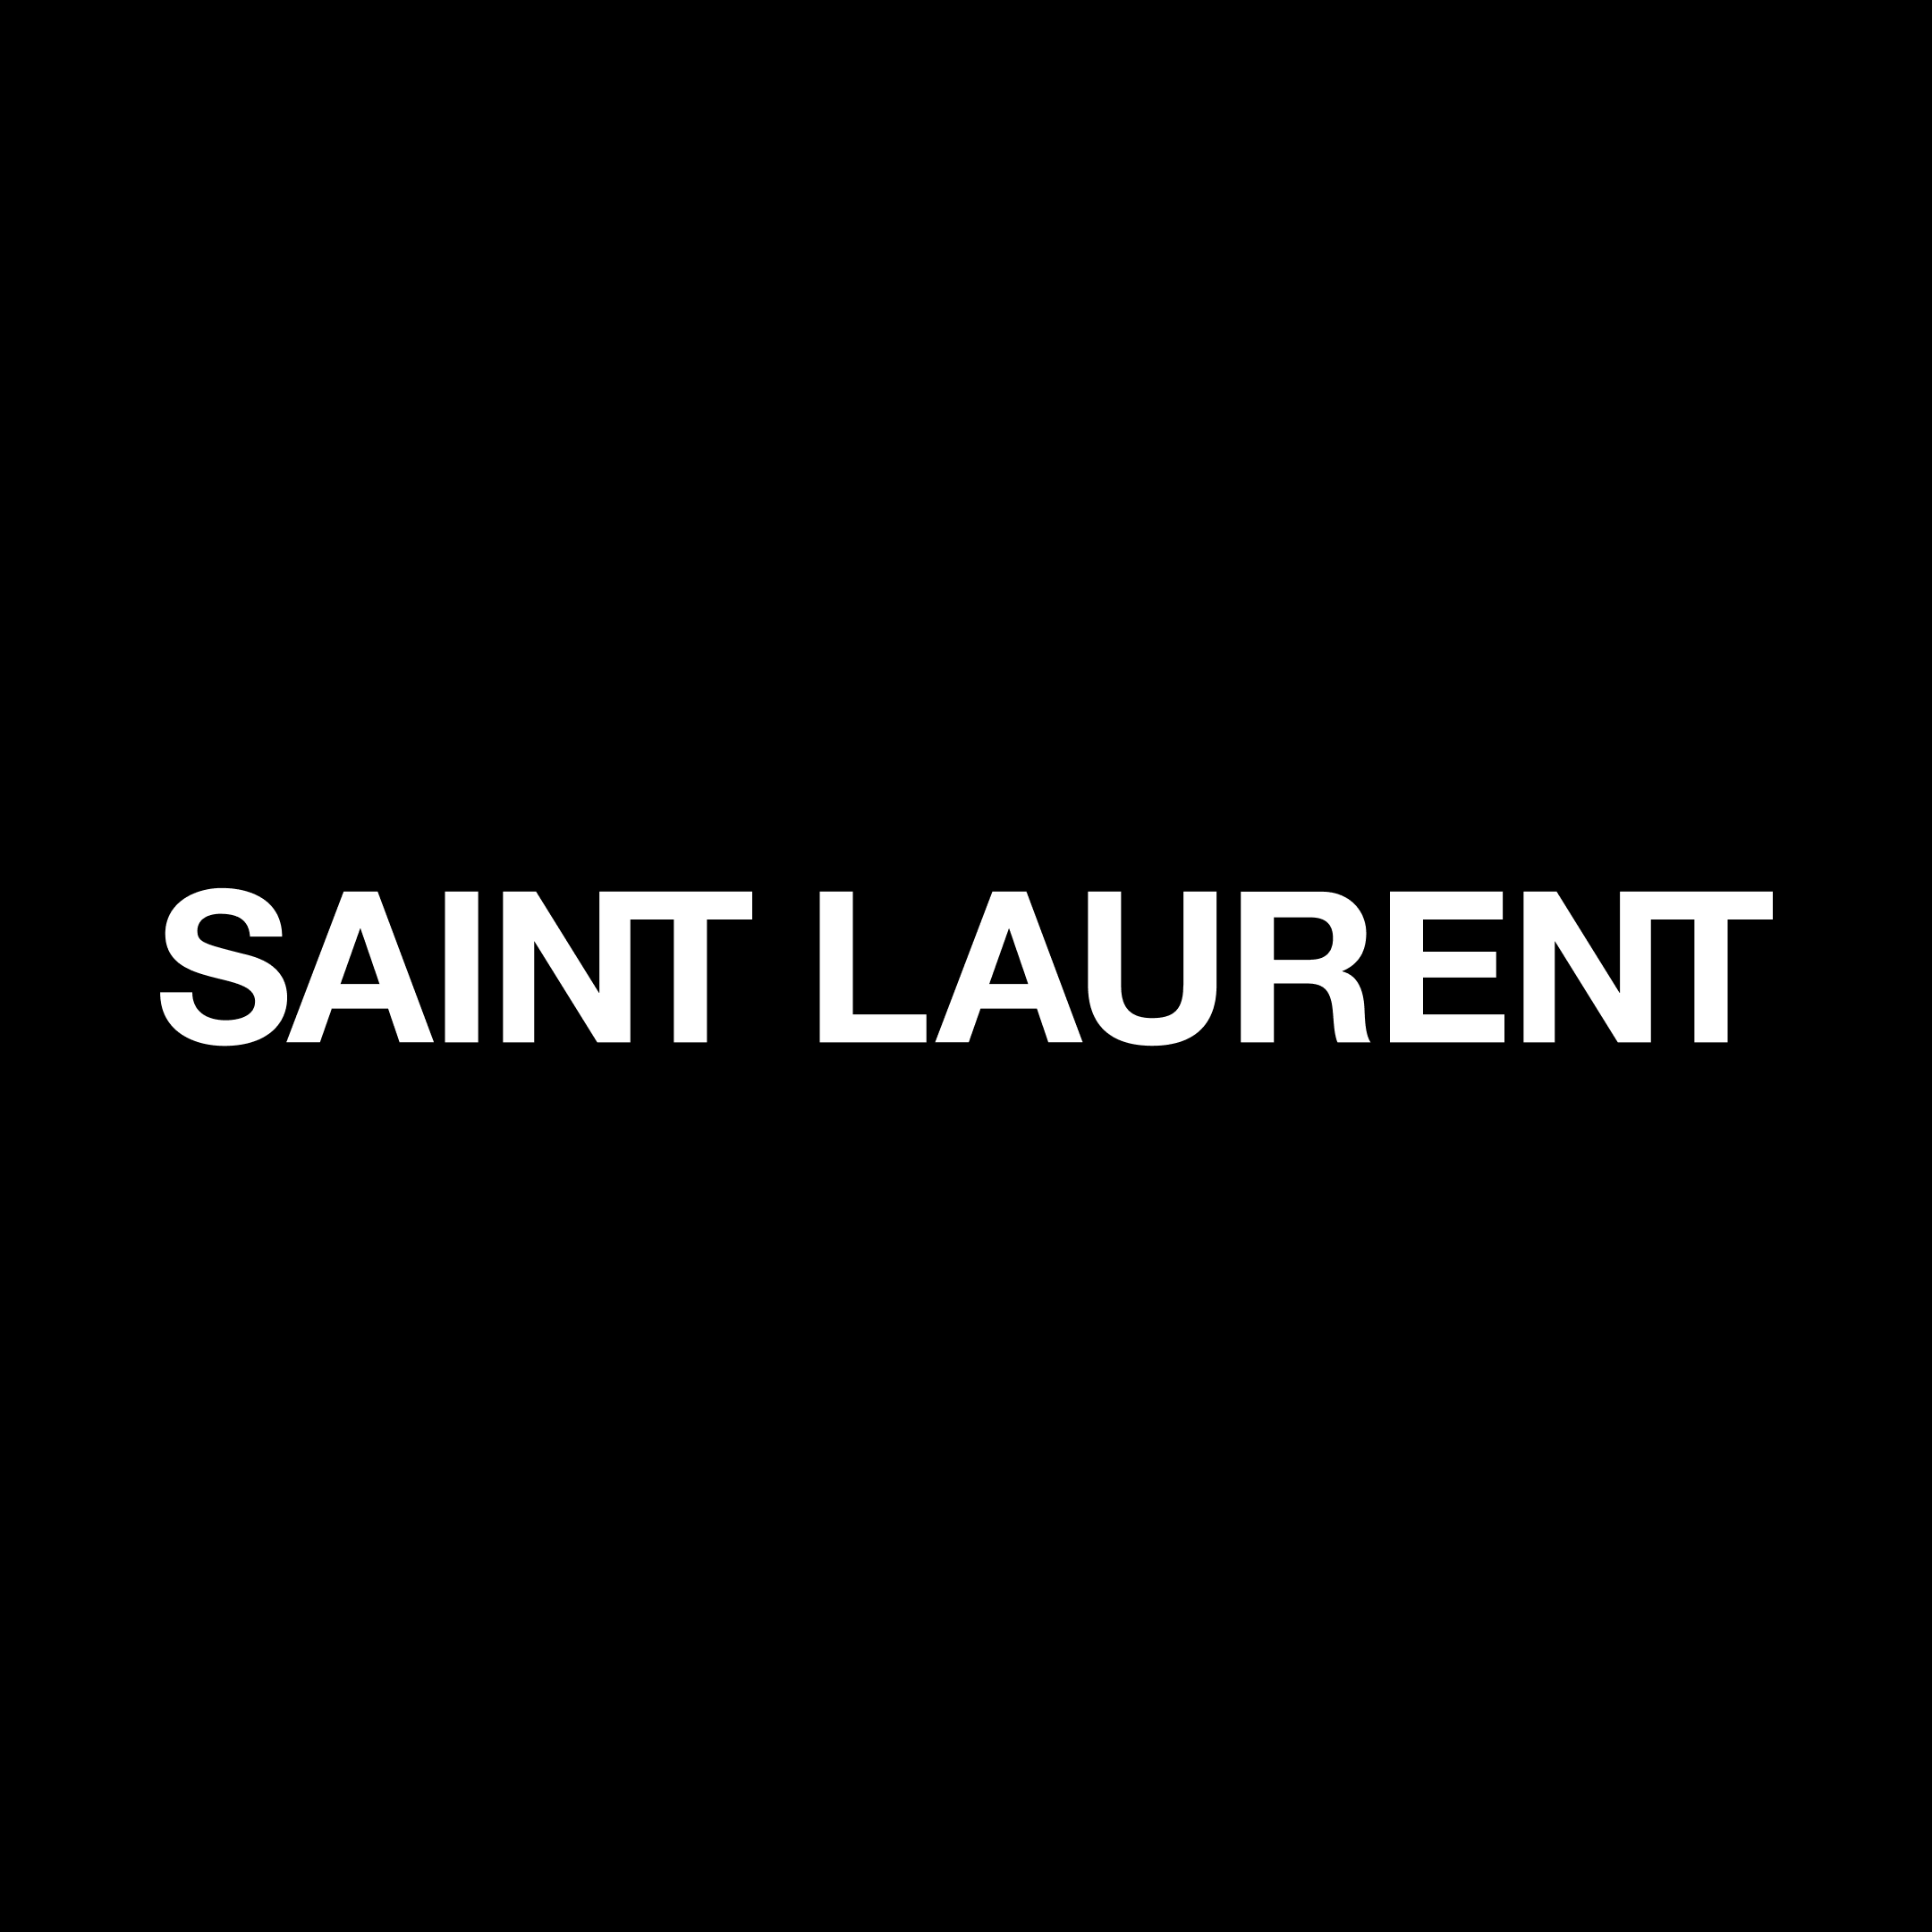 Saint Laurent in München - Logo